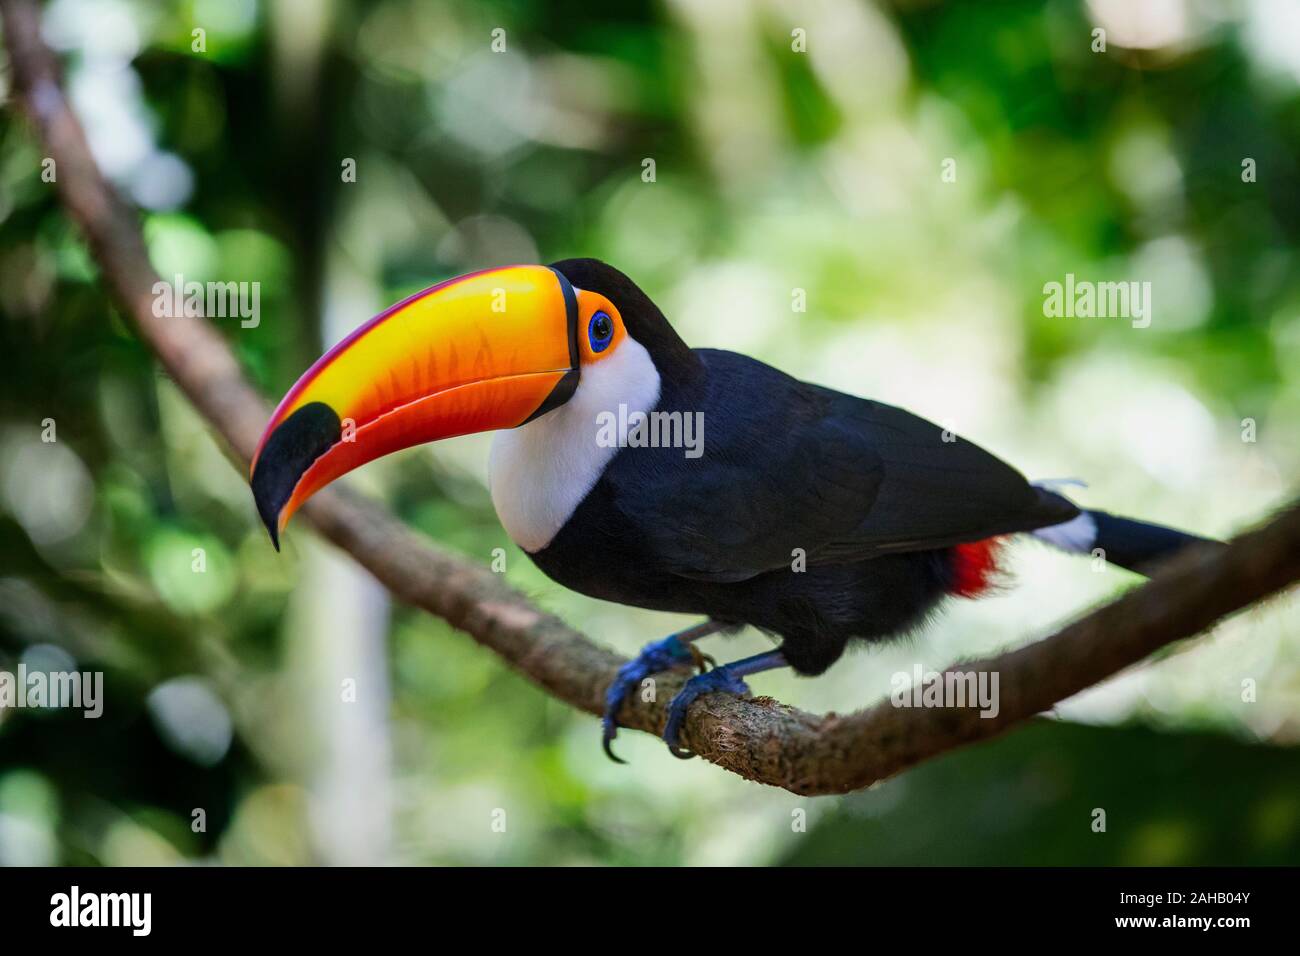 Toco Toucan Toucan Ramphastos toco albogularis' Stockfotografie - Alamy